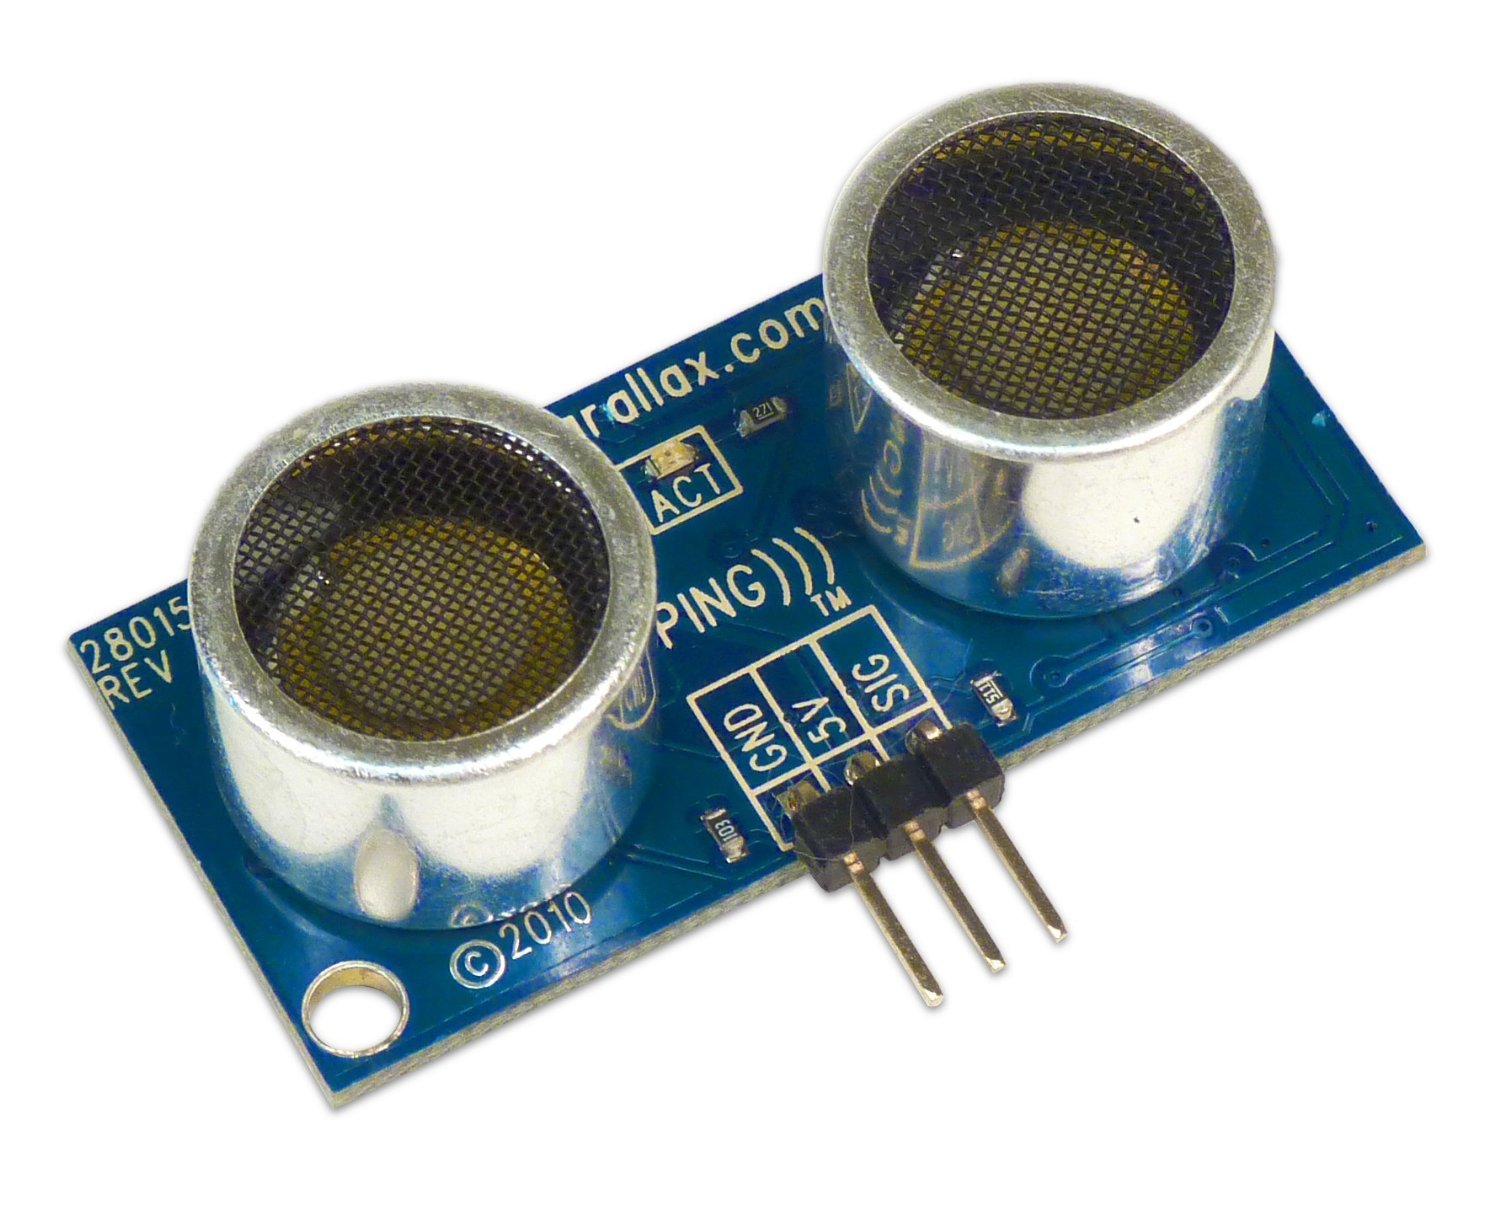 PING))) Ultrasonic Distance Sensor.